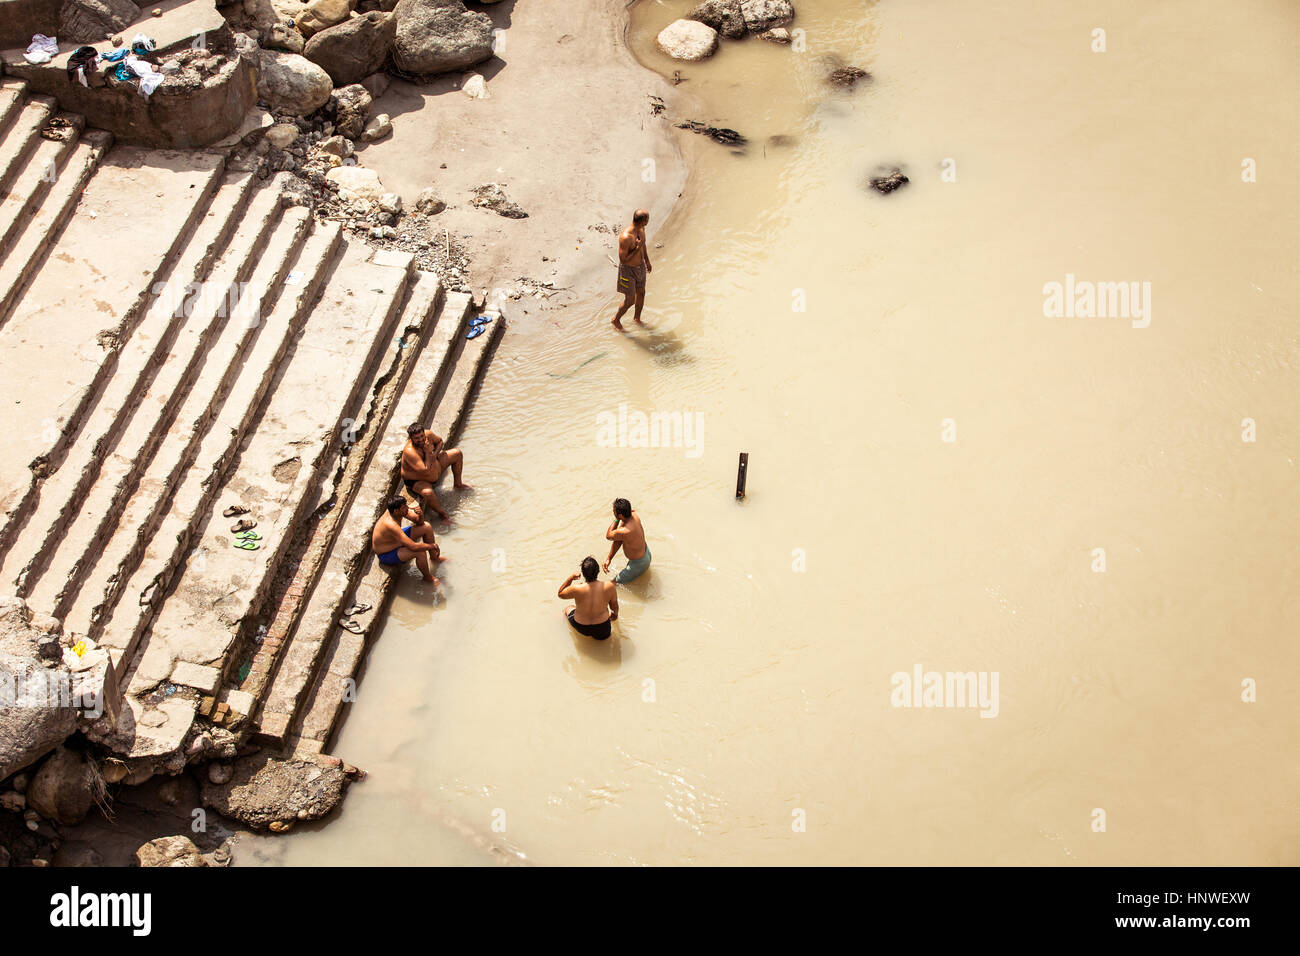 Rishikesh, India - September 22: Five indian men bathing in the Ganges river, Rishikesh, India on September 22, 2014. Stock Photo